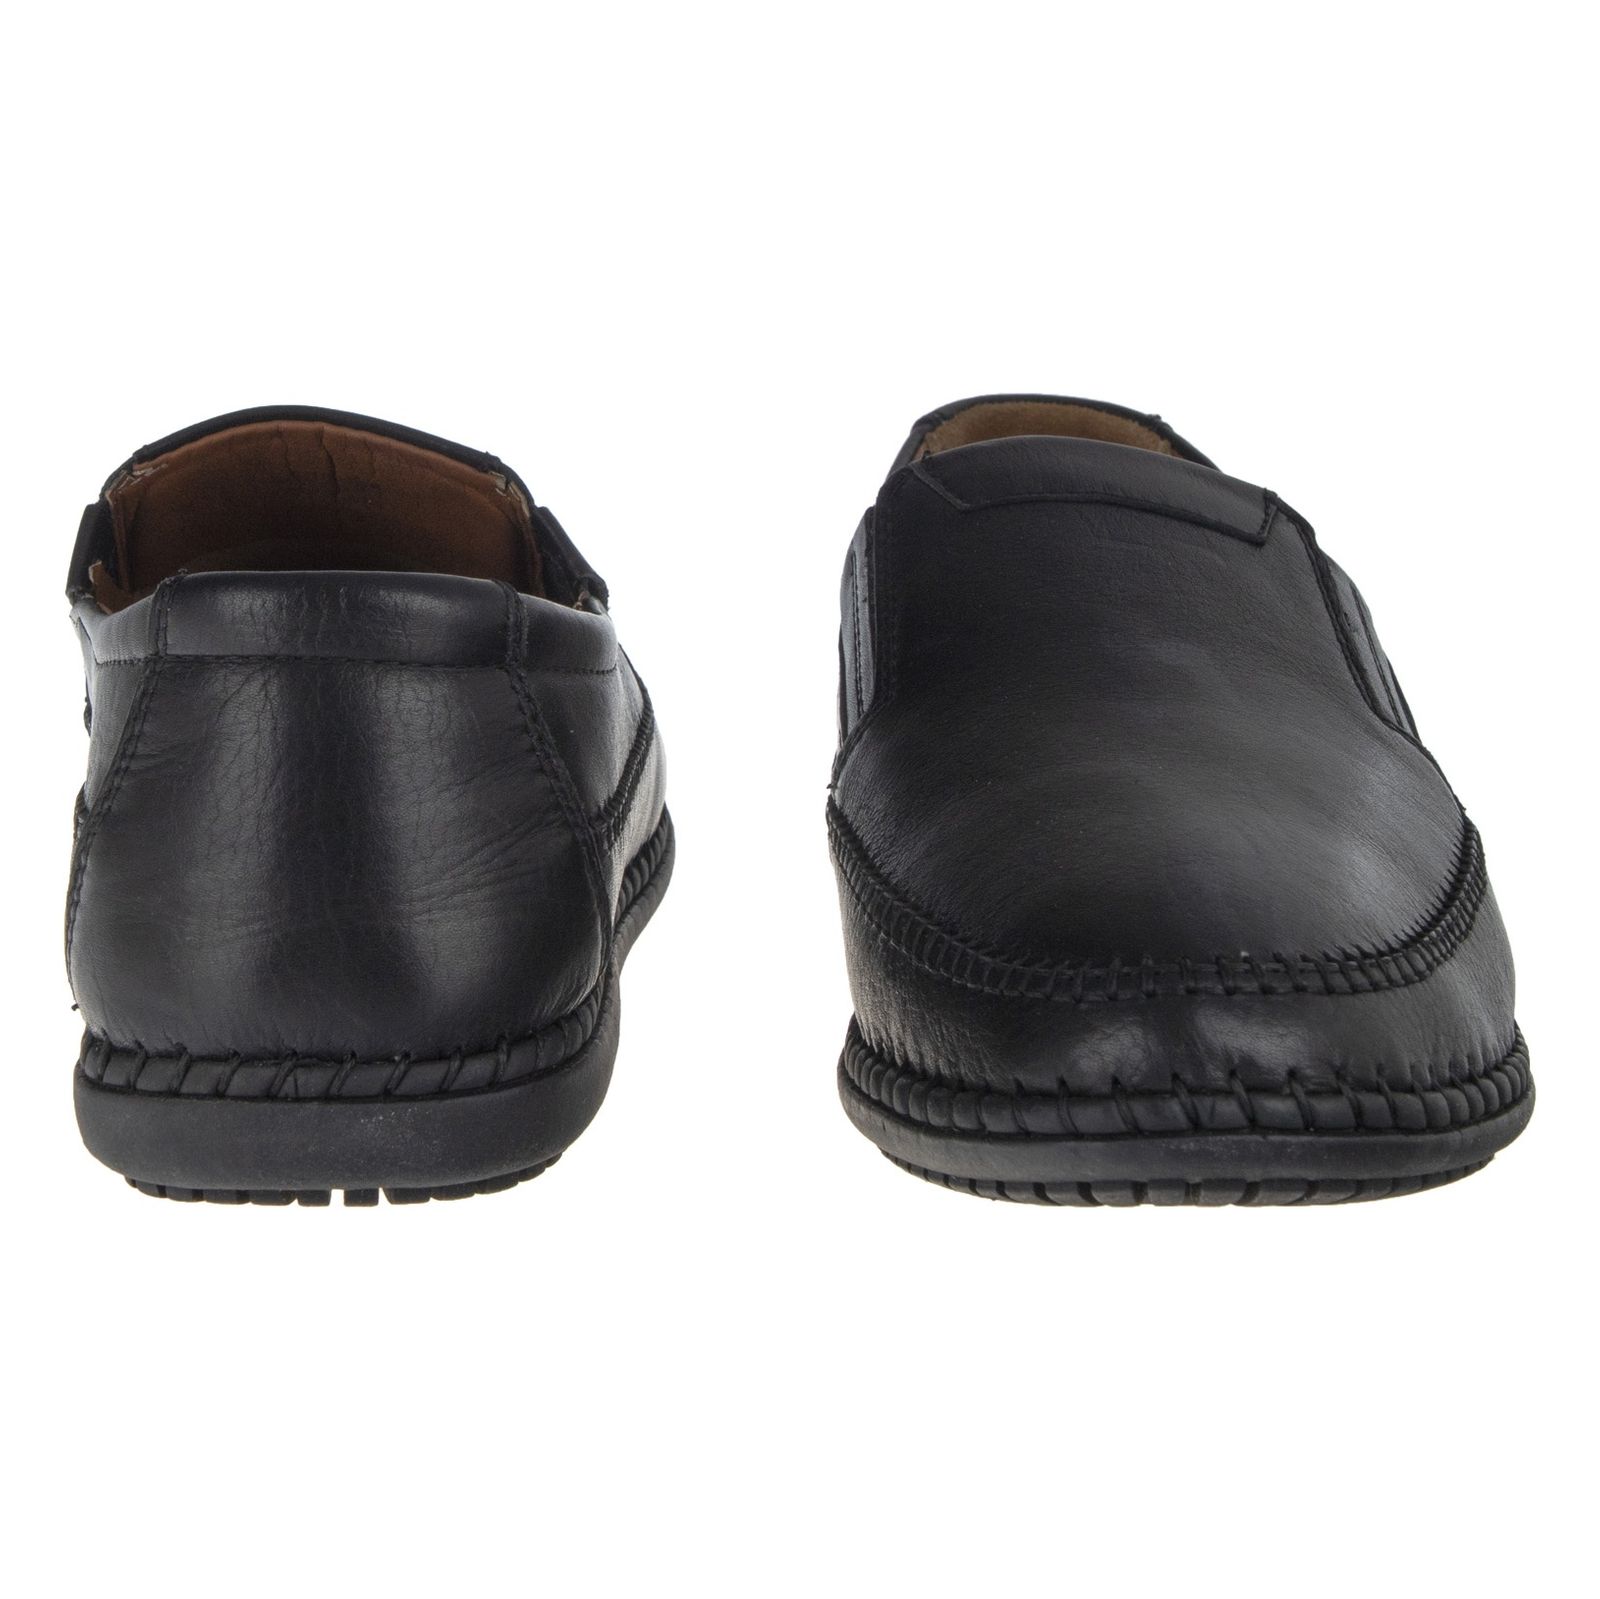 کفش روزمره مردانه پولاریس مدل 100256231-124 - مشکی - 5